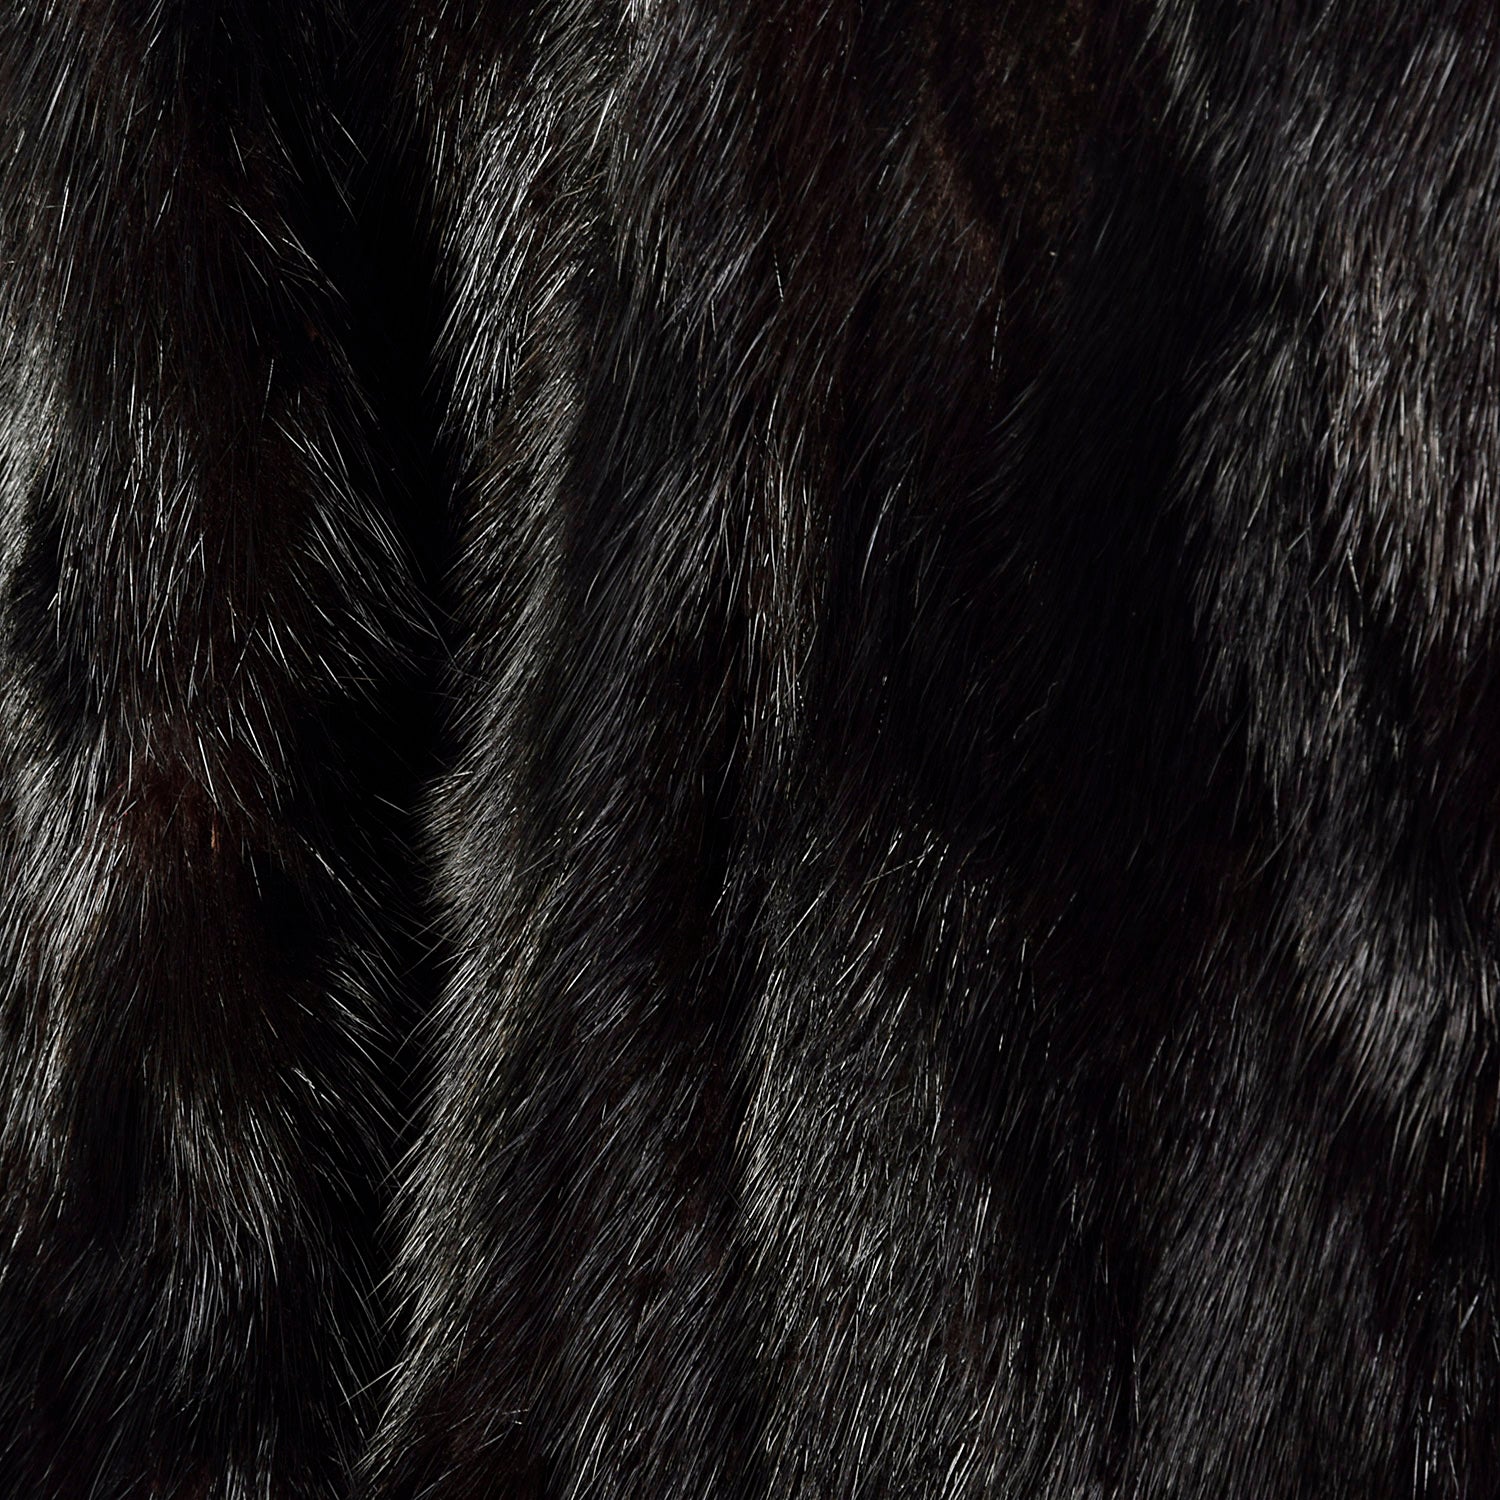 XS Black 1980s Mink Fur Coat